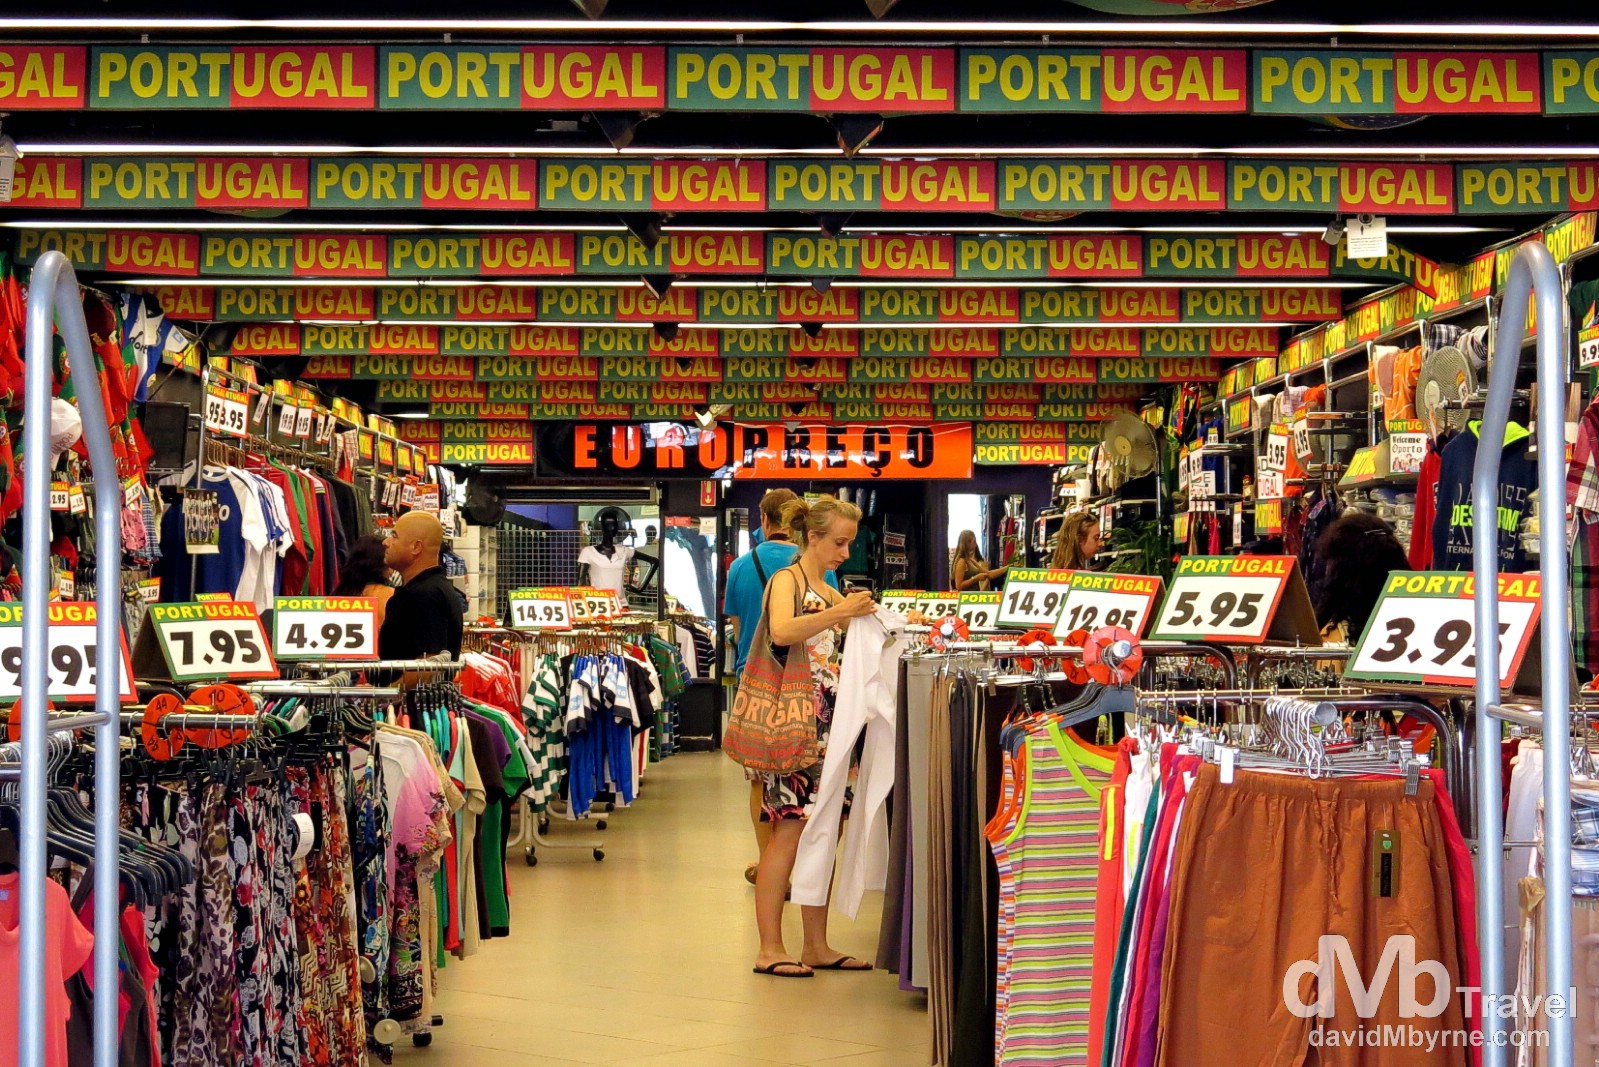 A touristy shop off Liberdade Square, Porto, Portugal. August 28th 2013.